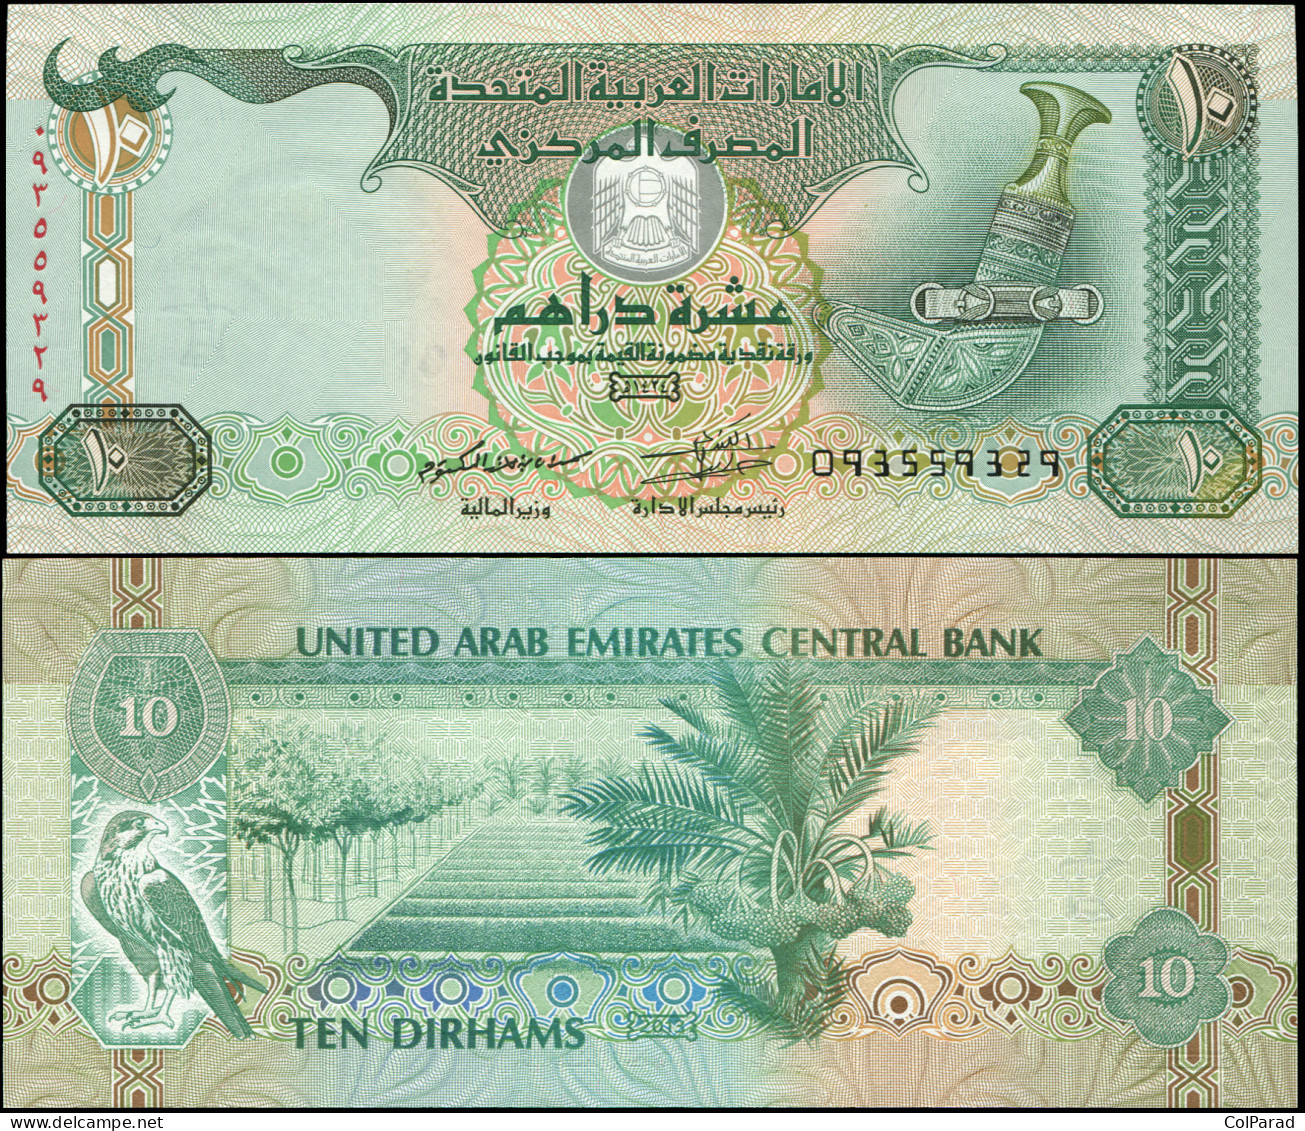 UNITED ARAB EMIRATES 10 DIRHAMS - ١٤٣٤ / 2013 - Unc - P.27b Paper Banknote - Verenigde Arabische Emiraten